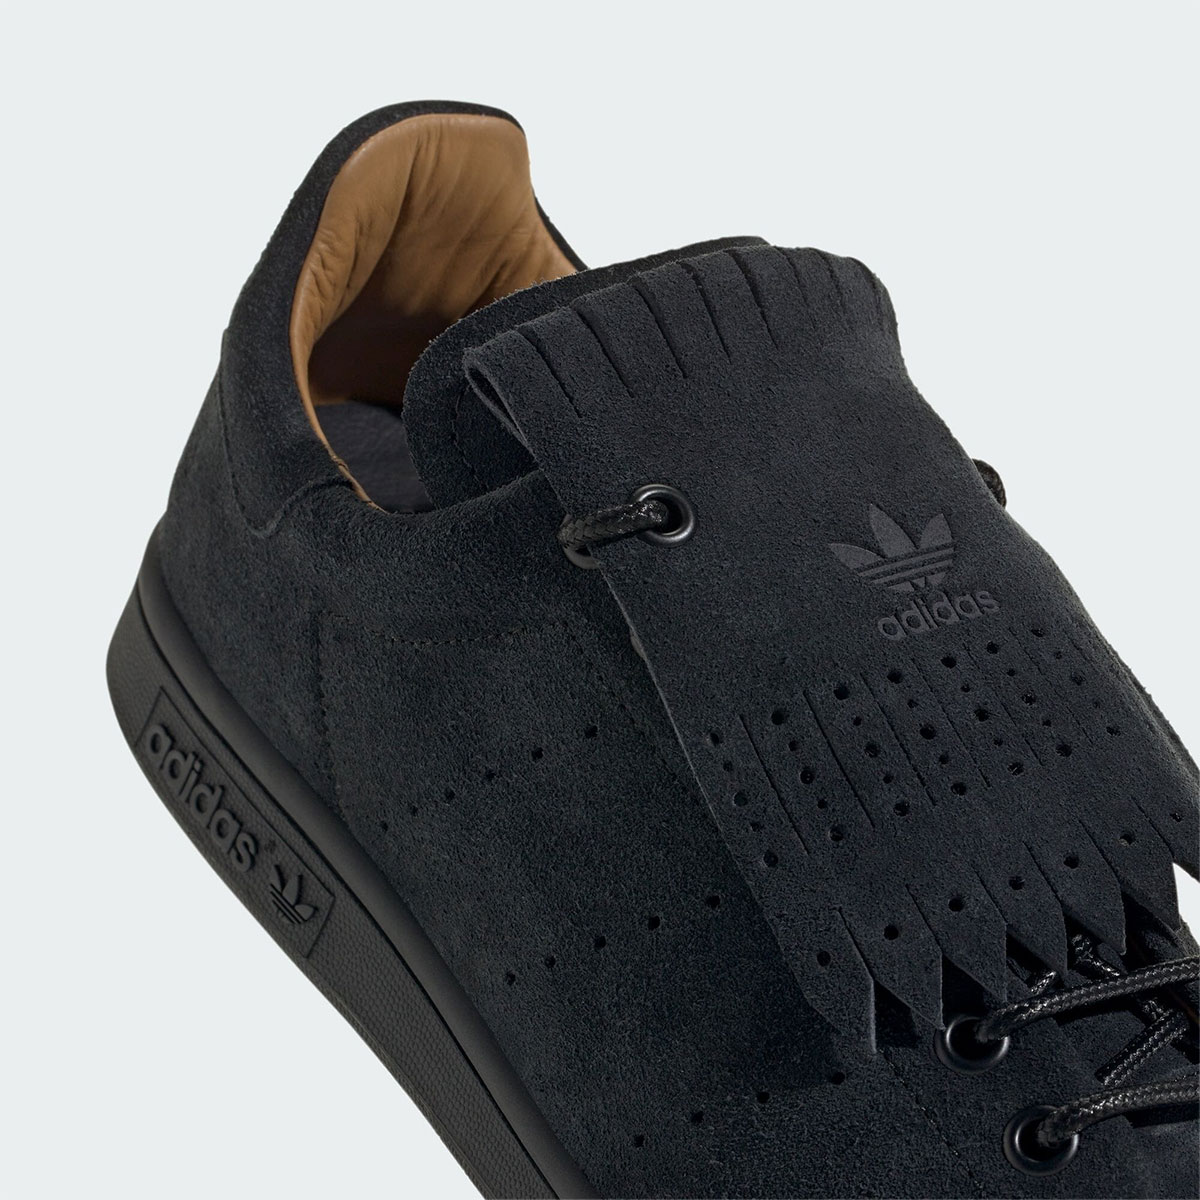 Adidas Stan Smith Lux Black Ih9988 1